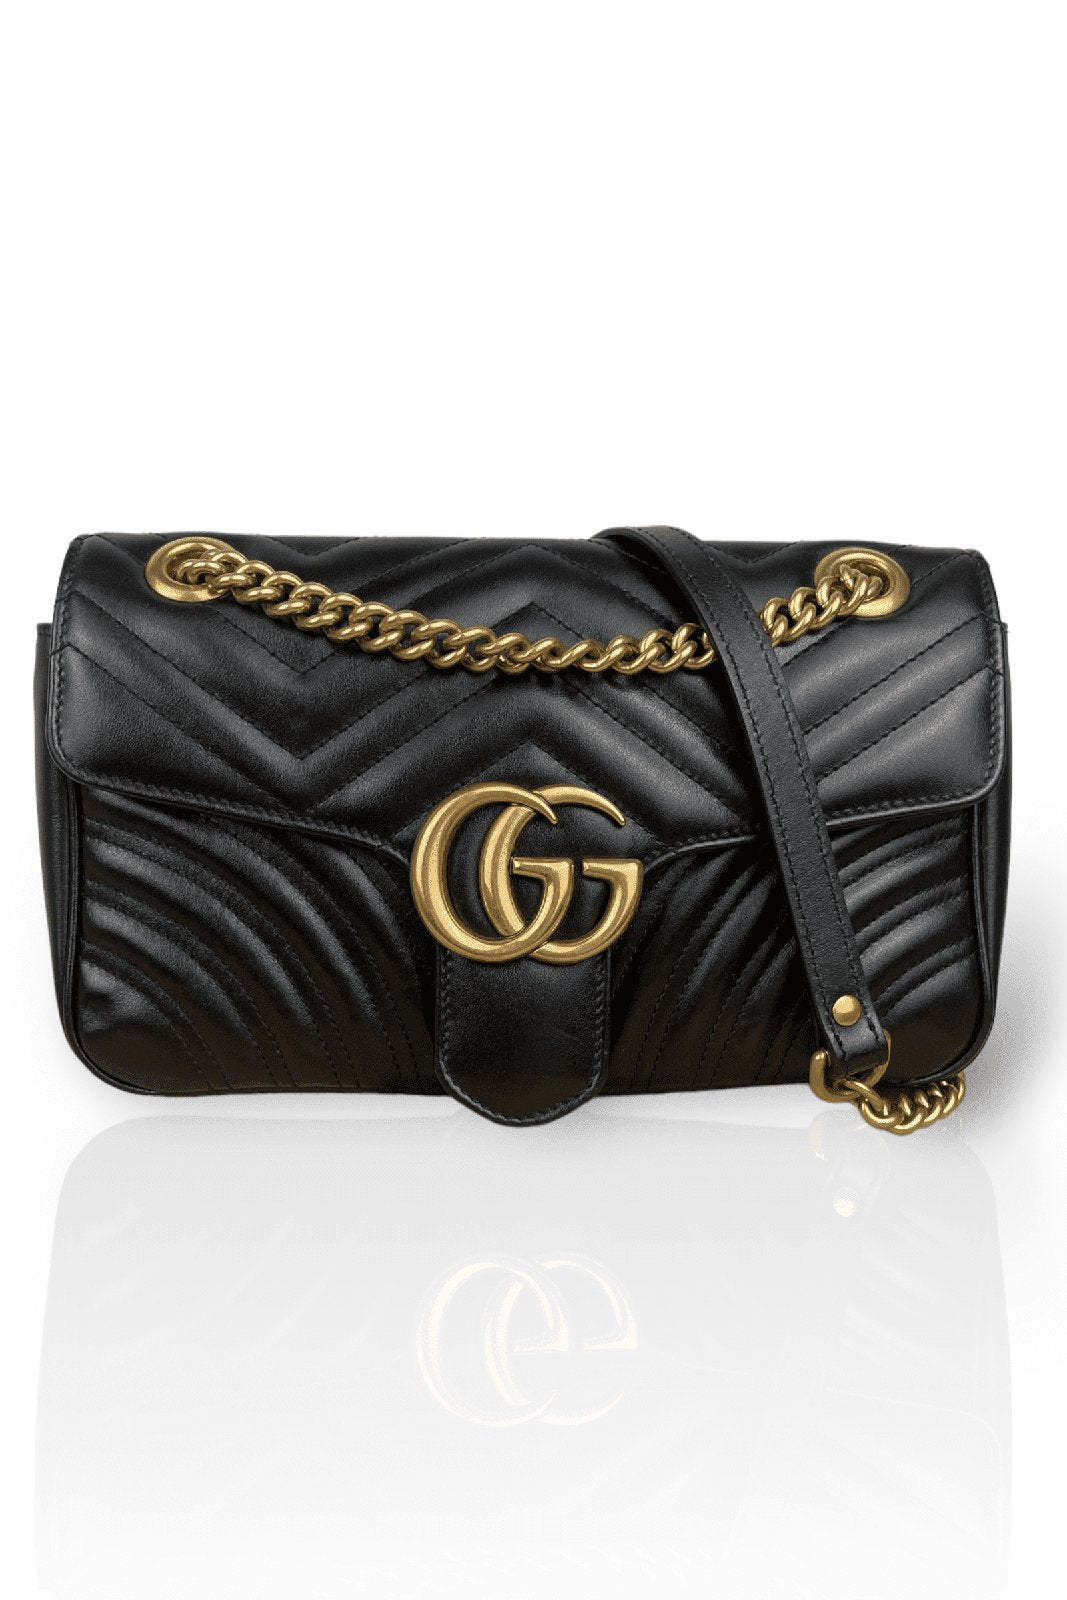 Gucci Brand Bag